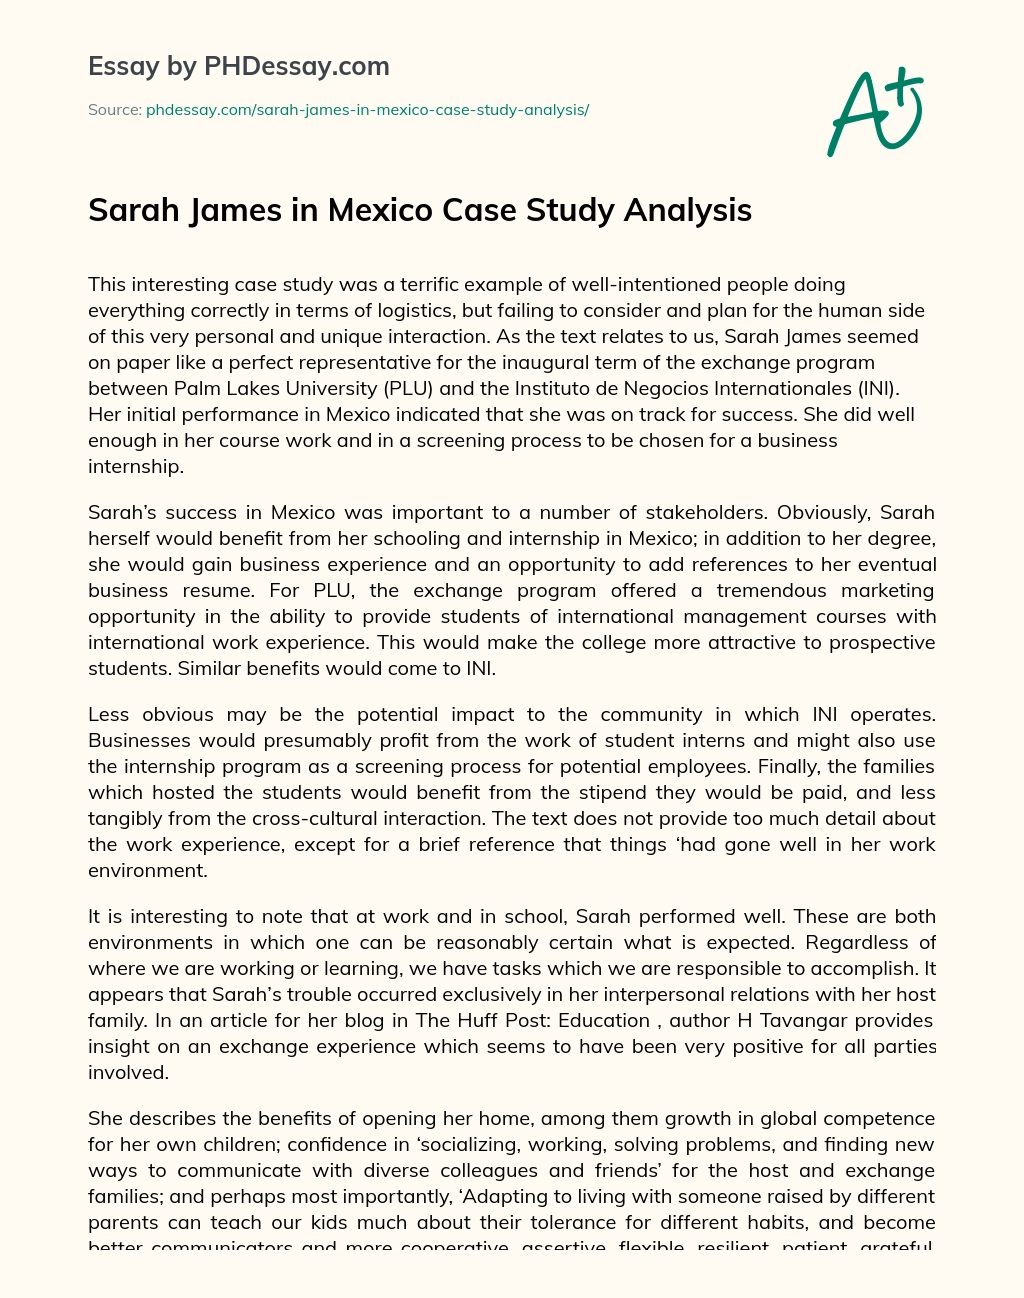 Sarah James in Mexico Case Study Analysis essay